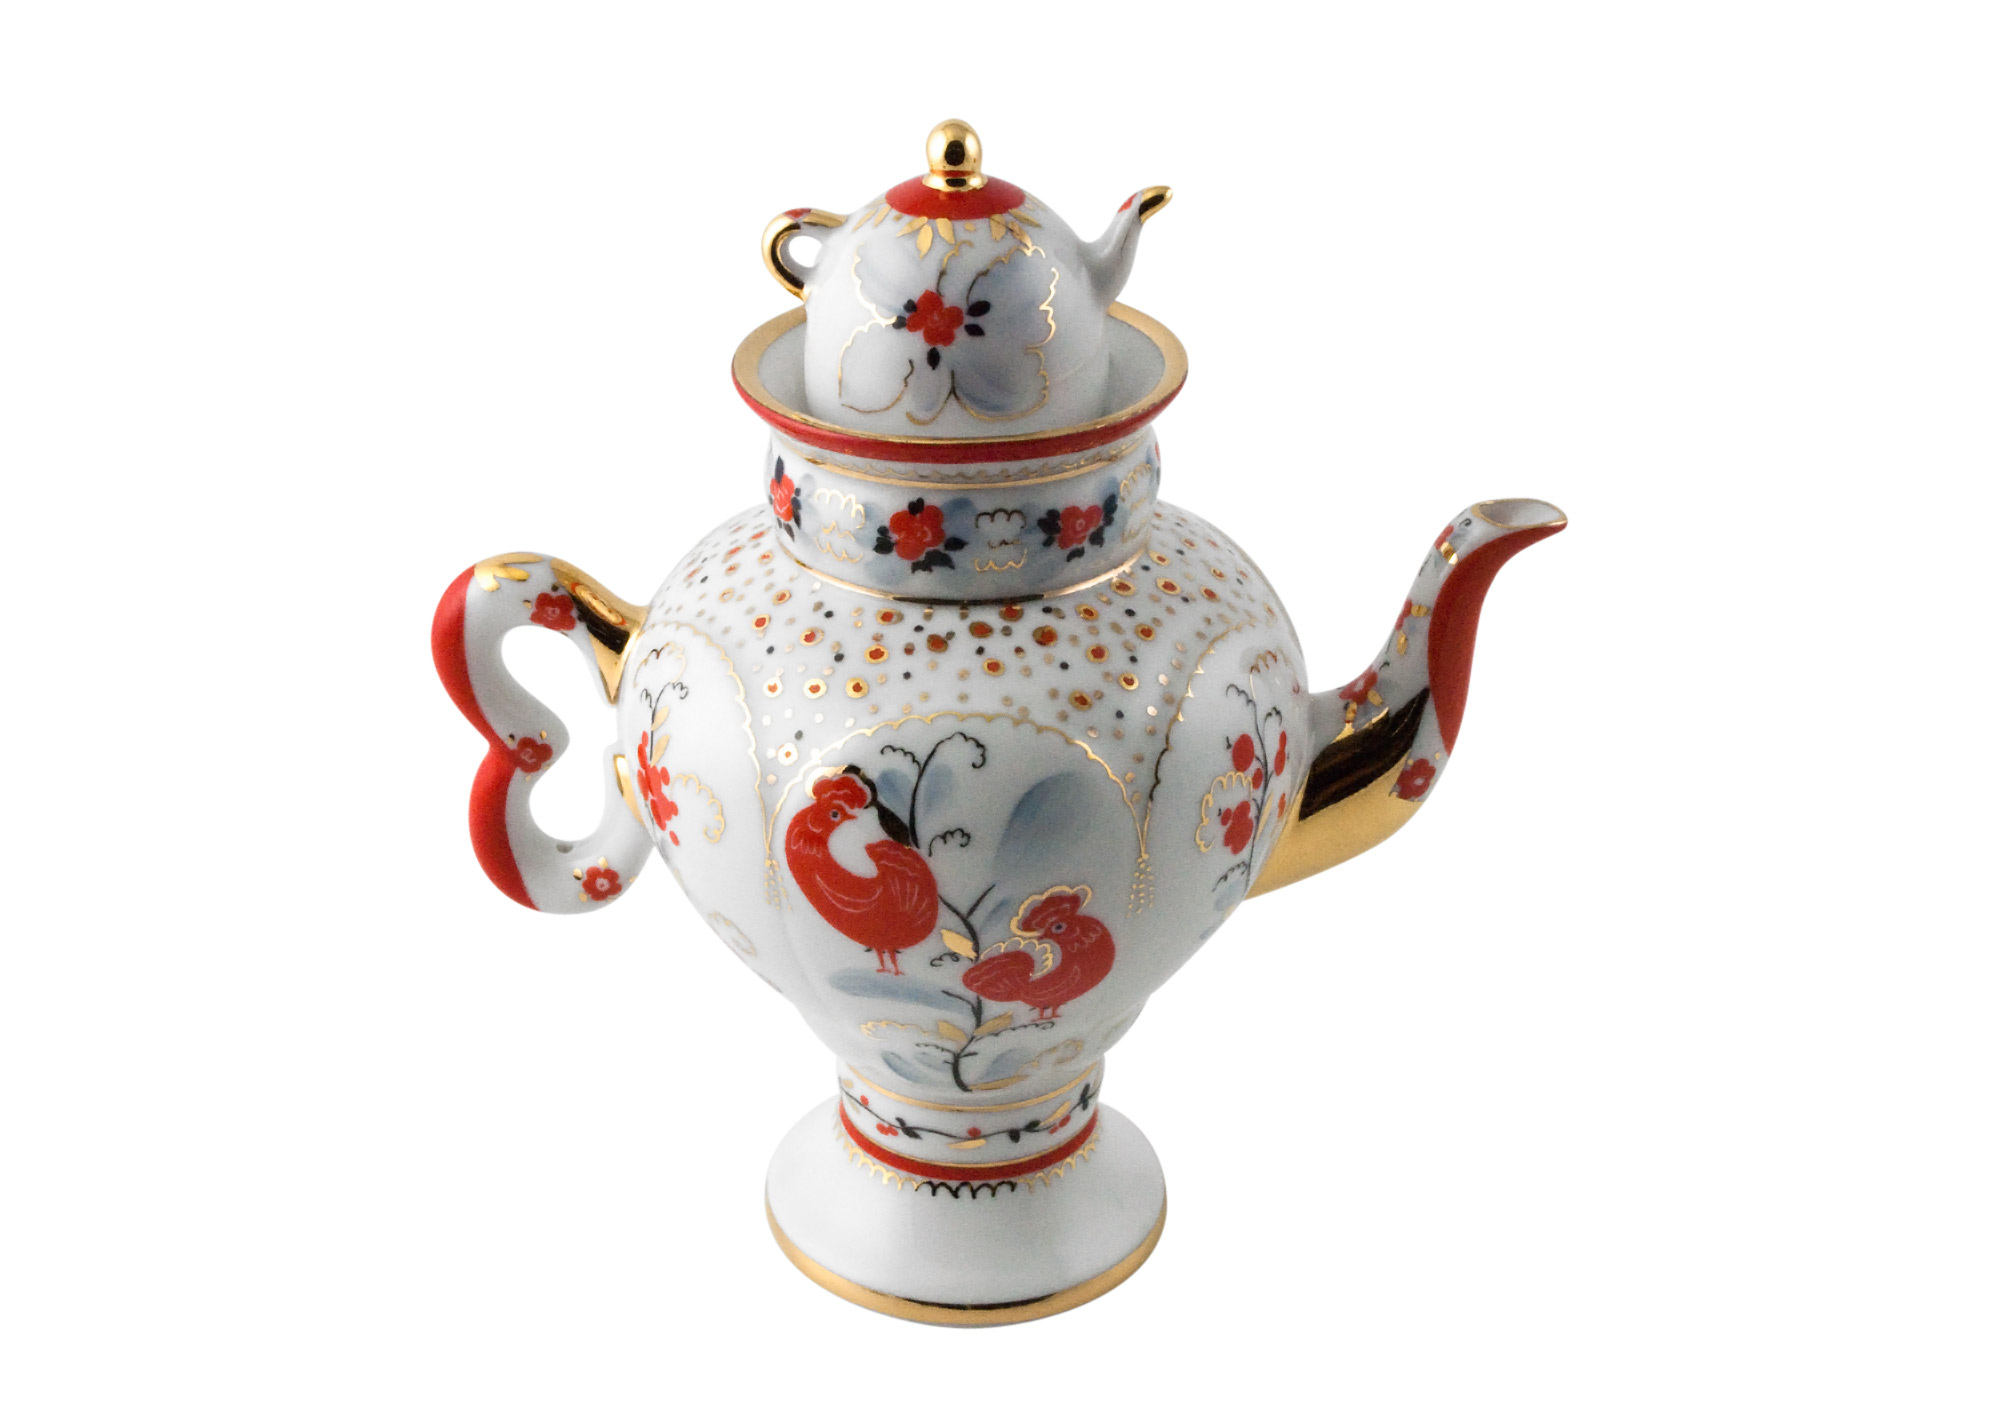 Buy Roosters Samovar Teapot at GoldenCockerel.com